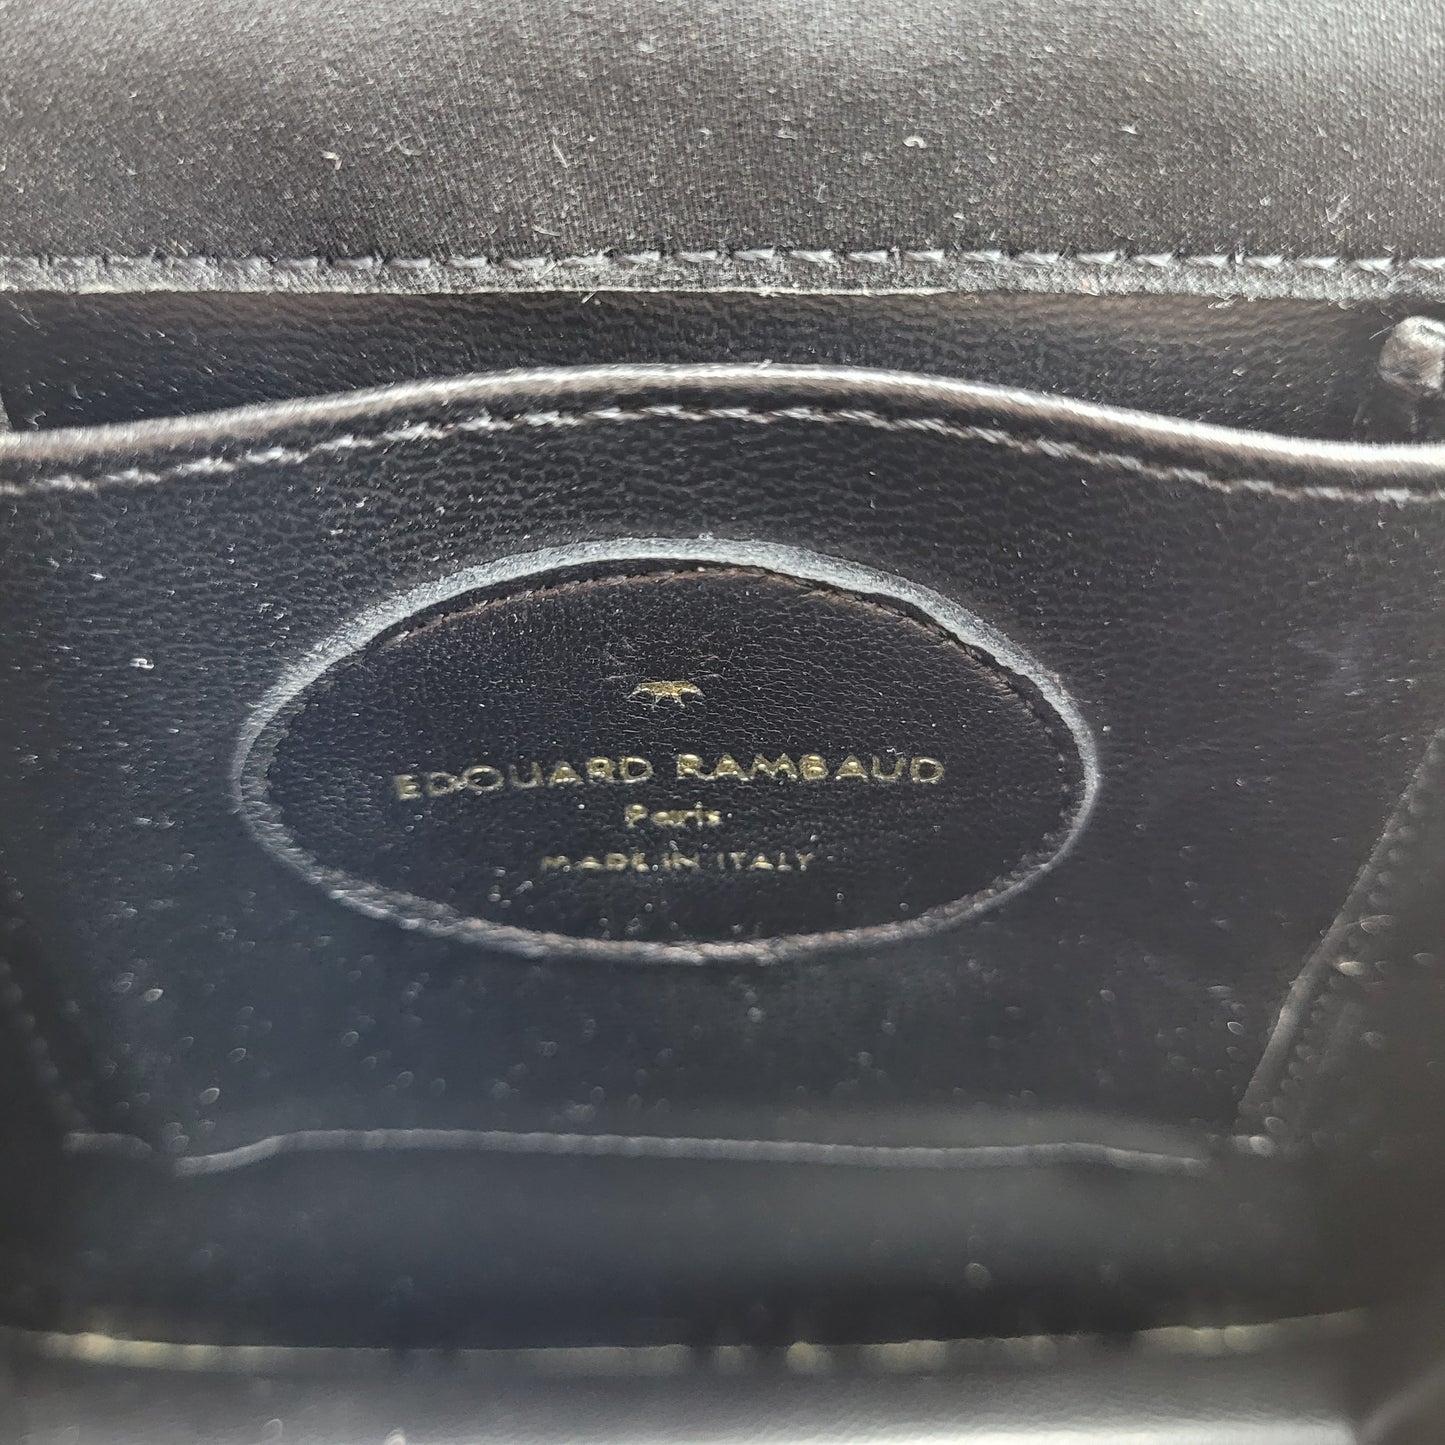 Vintage Edouard Rambaud Top Handle Bag